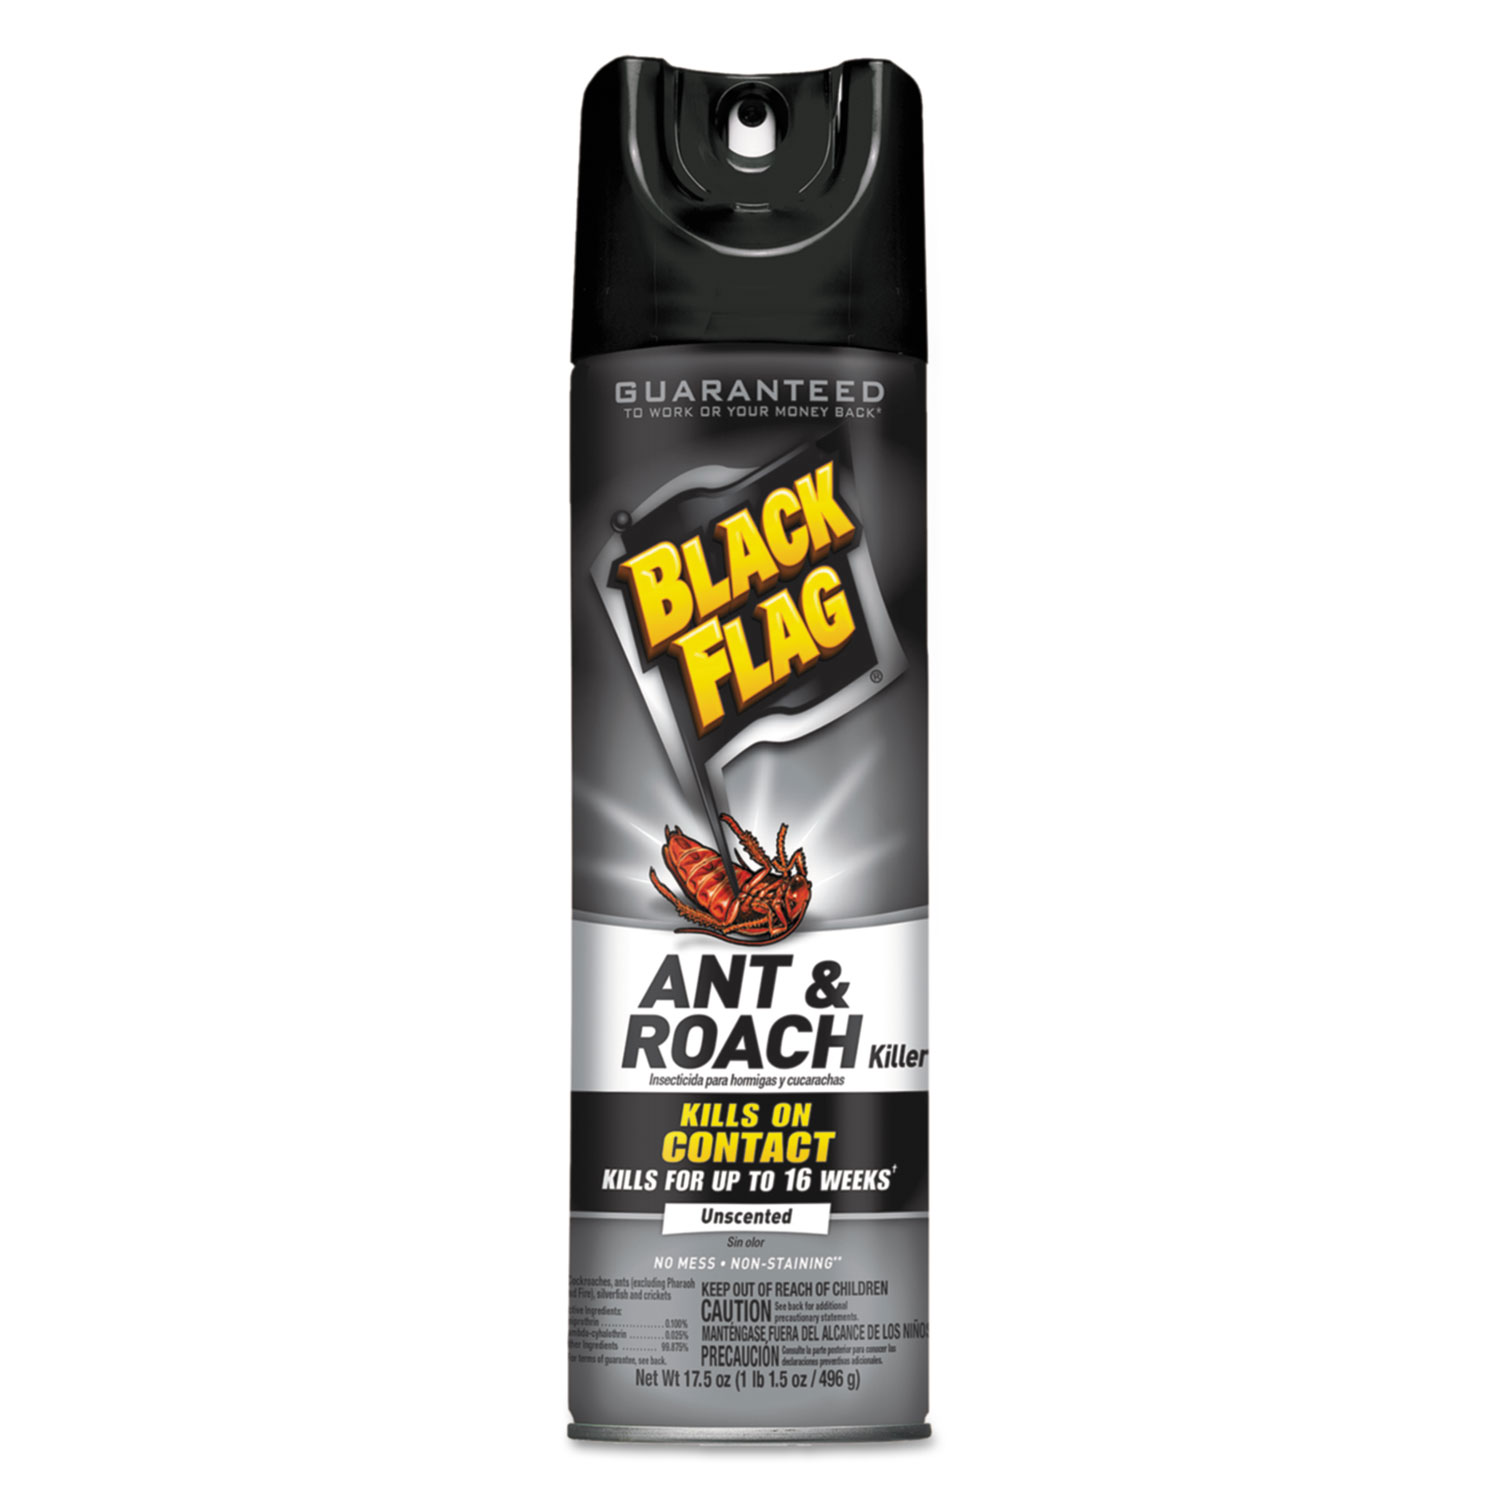  Diversey CB110315 Black Flag Ant & Roach Killer Spray, 17.5 oz Aerosol (DVOCB110315EA) 